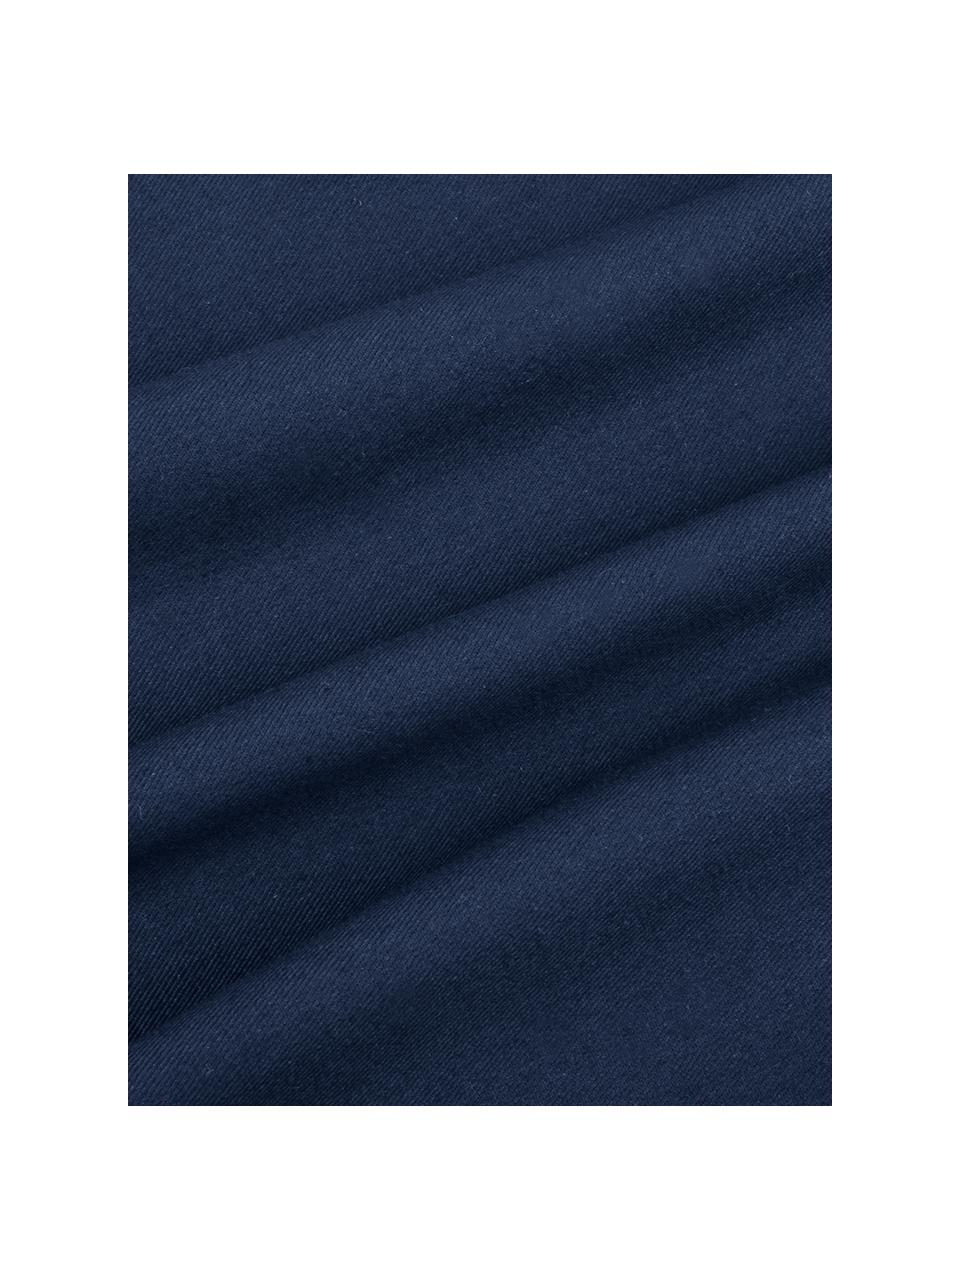 Federa arredo in cotone blu navy Mads, 100% cotone, Blu navy, Larg. 30 x Lung. 50 cm